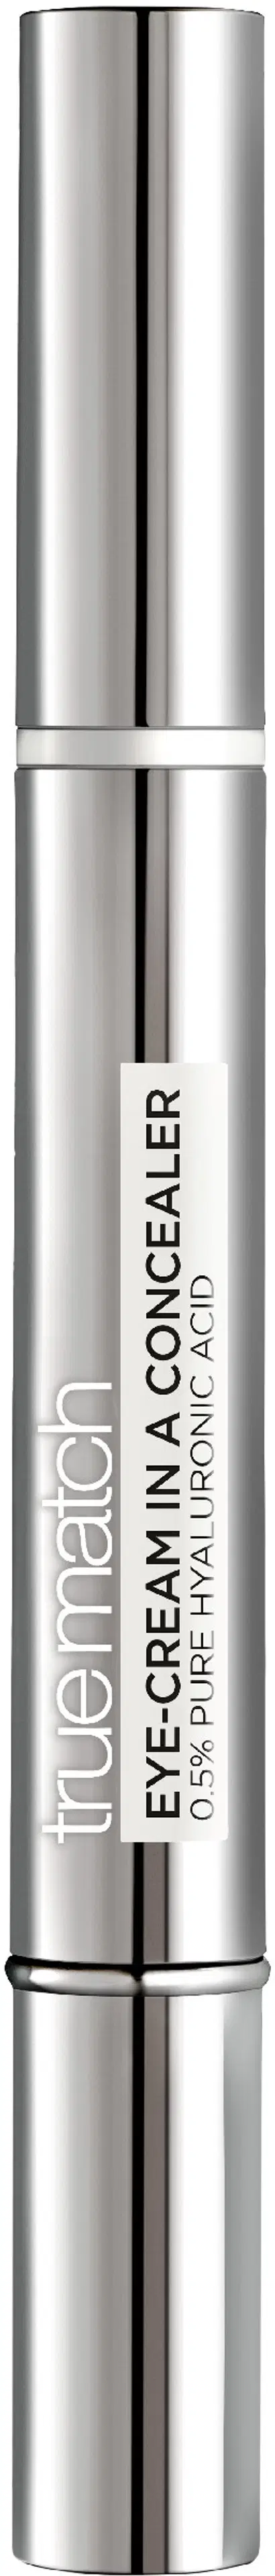 L'Oréal Paris True Match Eye-Cream in a Concealer 4-7D Golden Sable peitevoide 2 ml